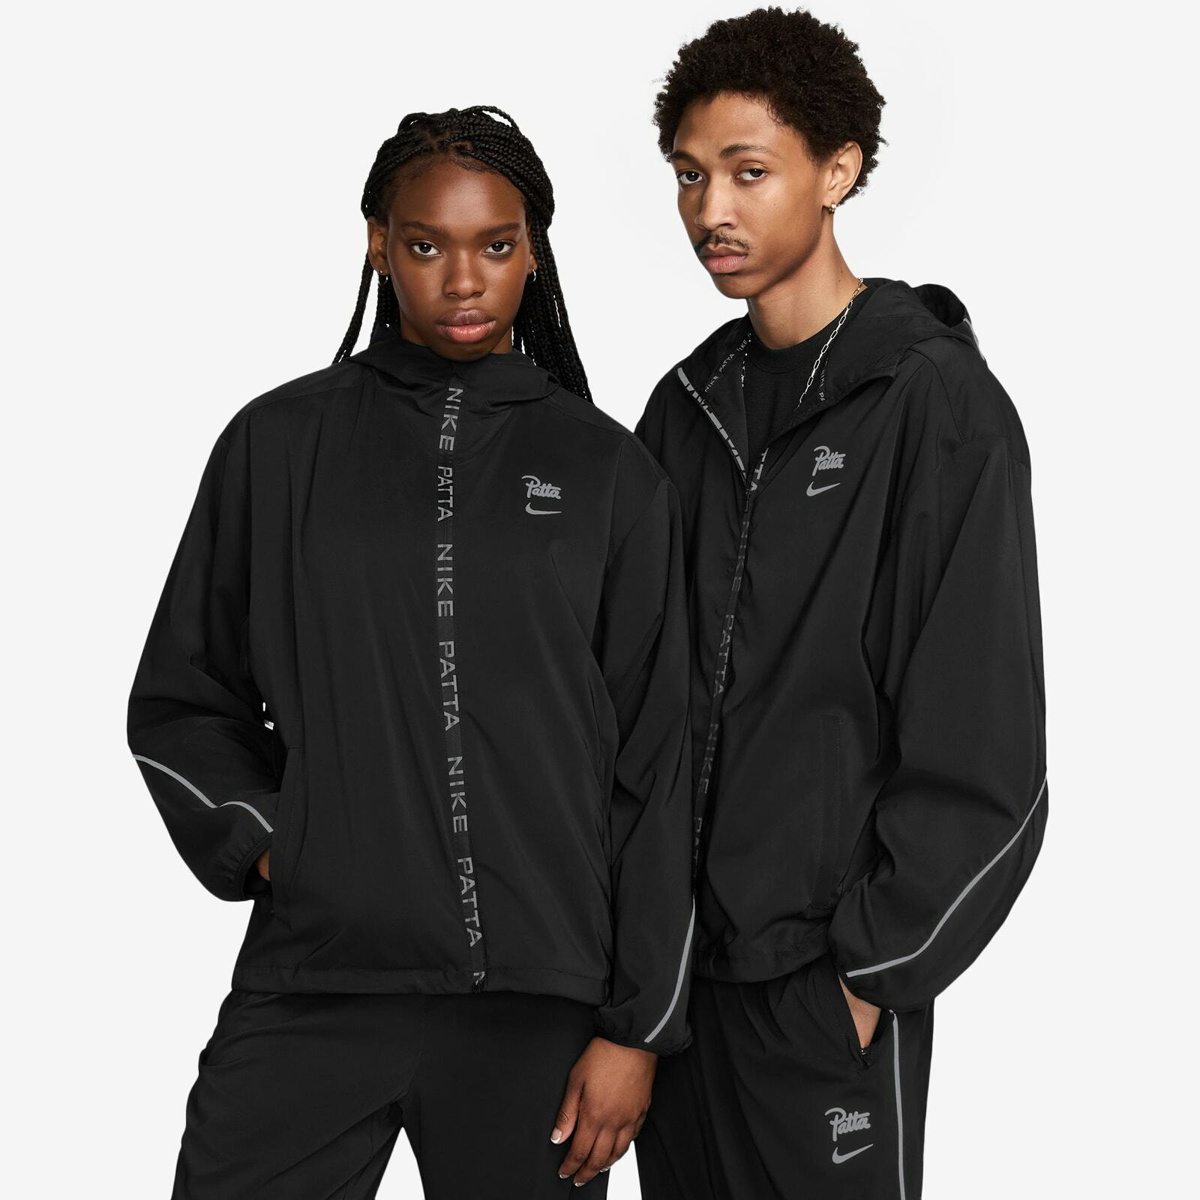 Nike x Patta Full Zip Jacket in Black Nike